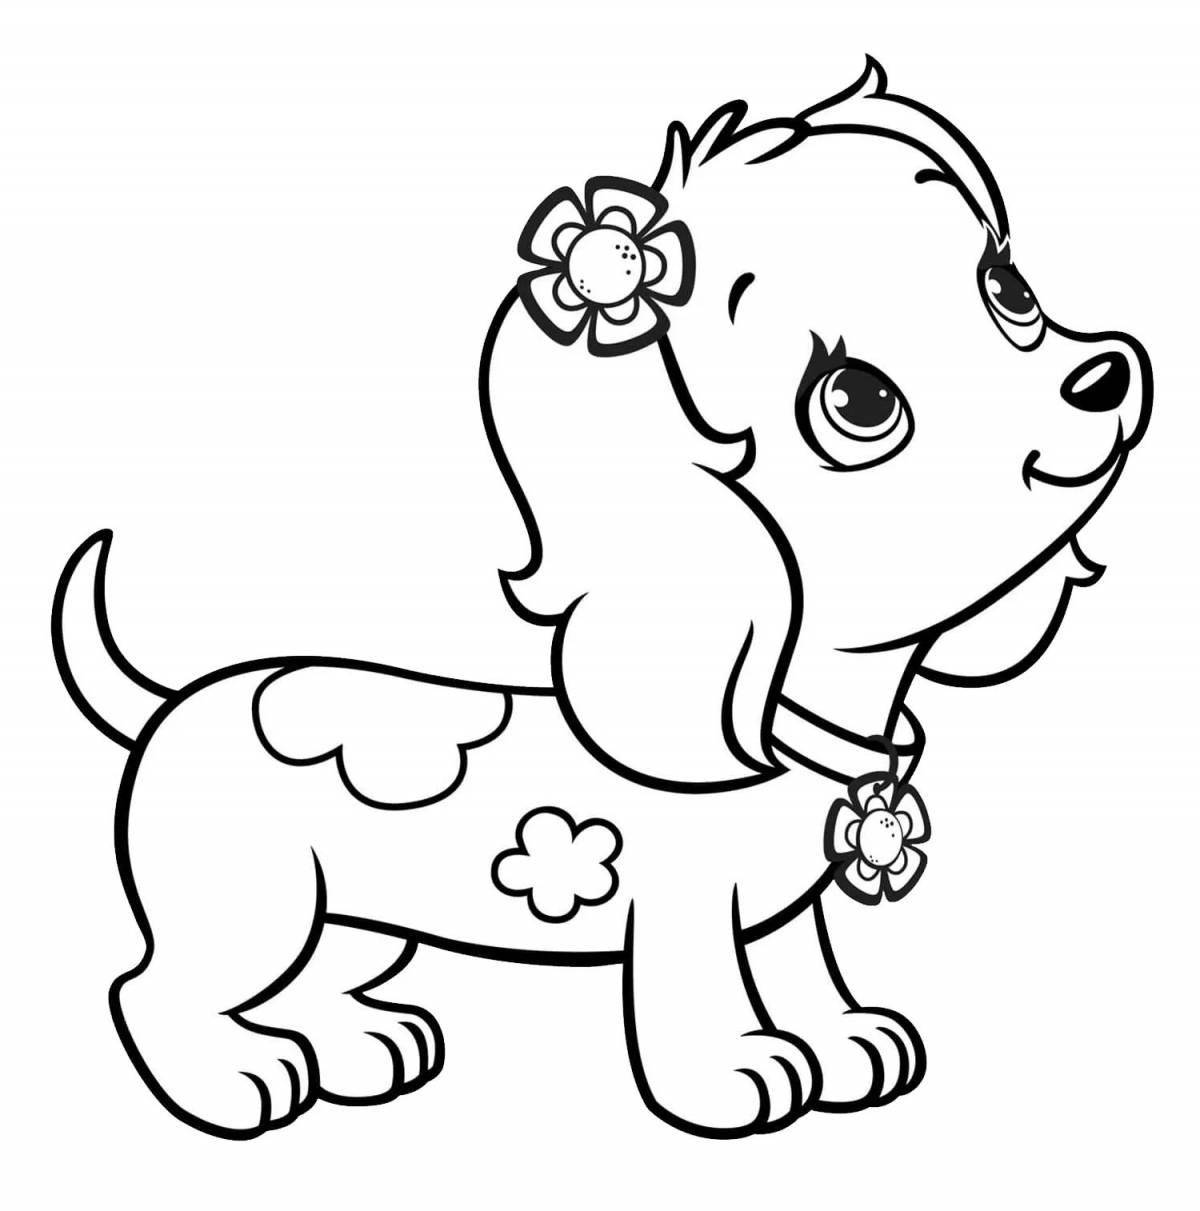 Joyful cute dog coloring book